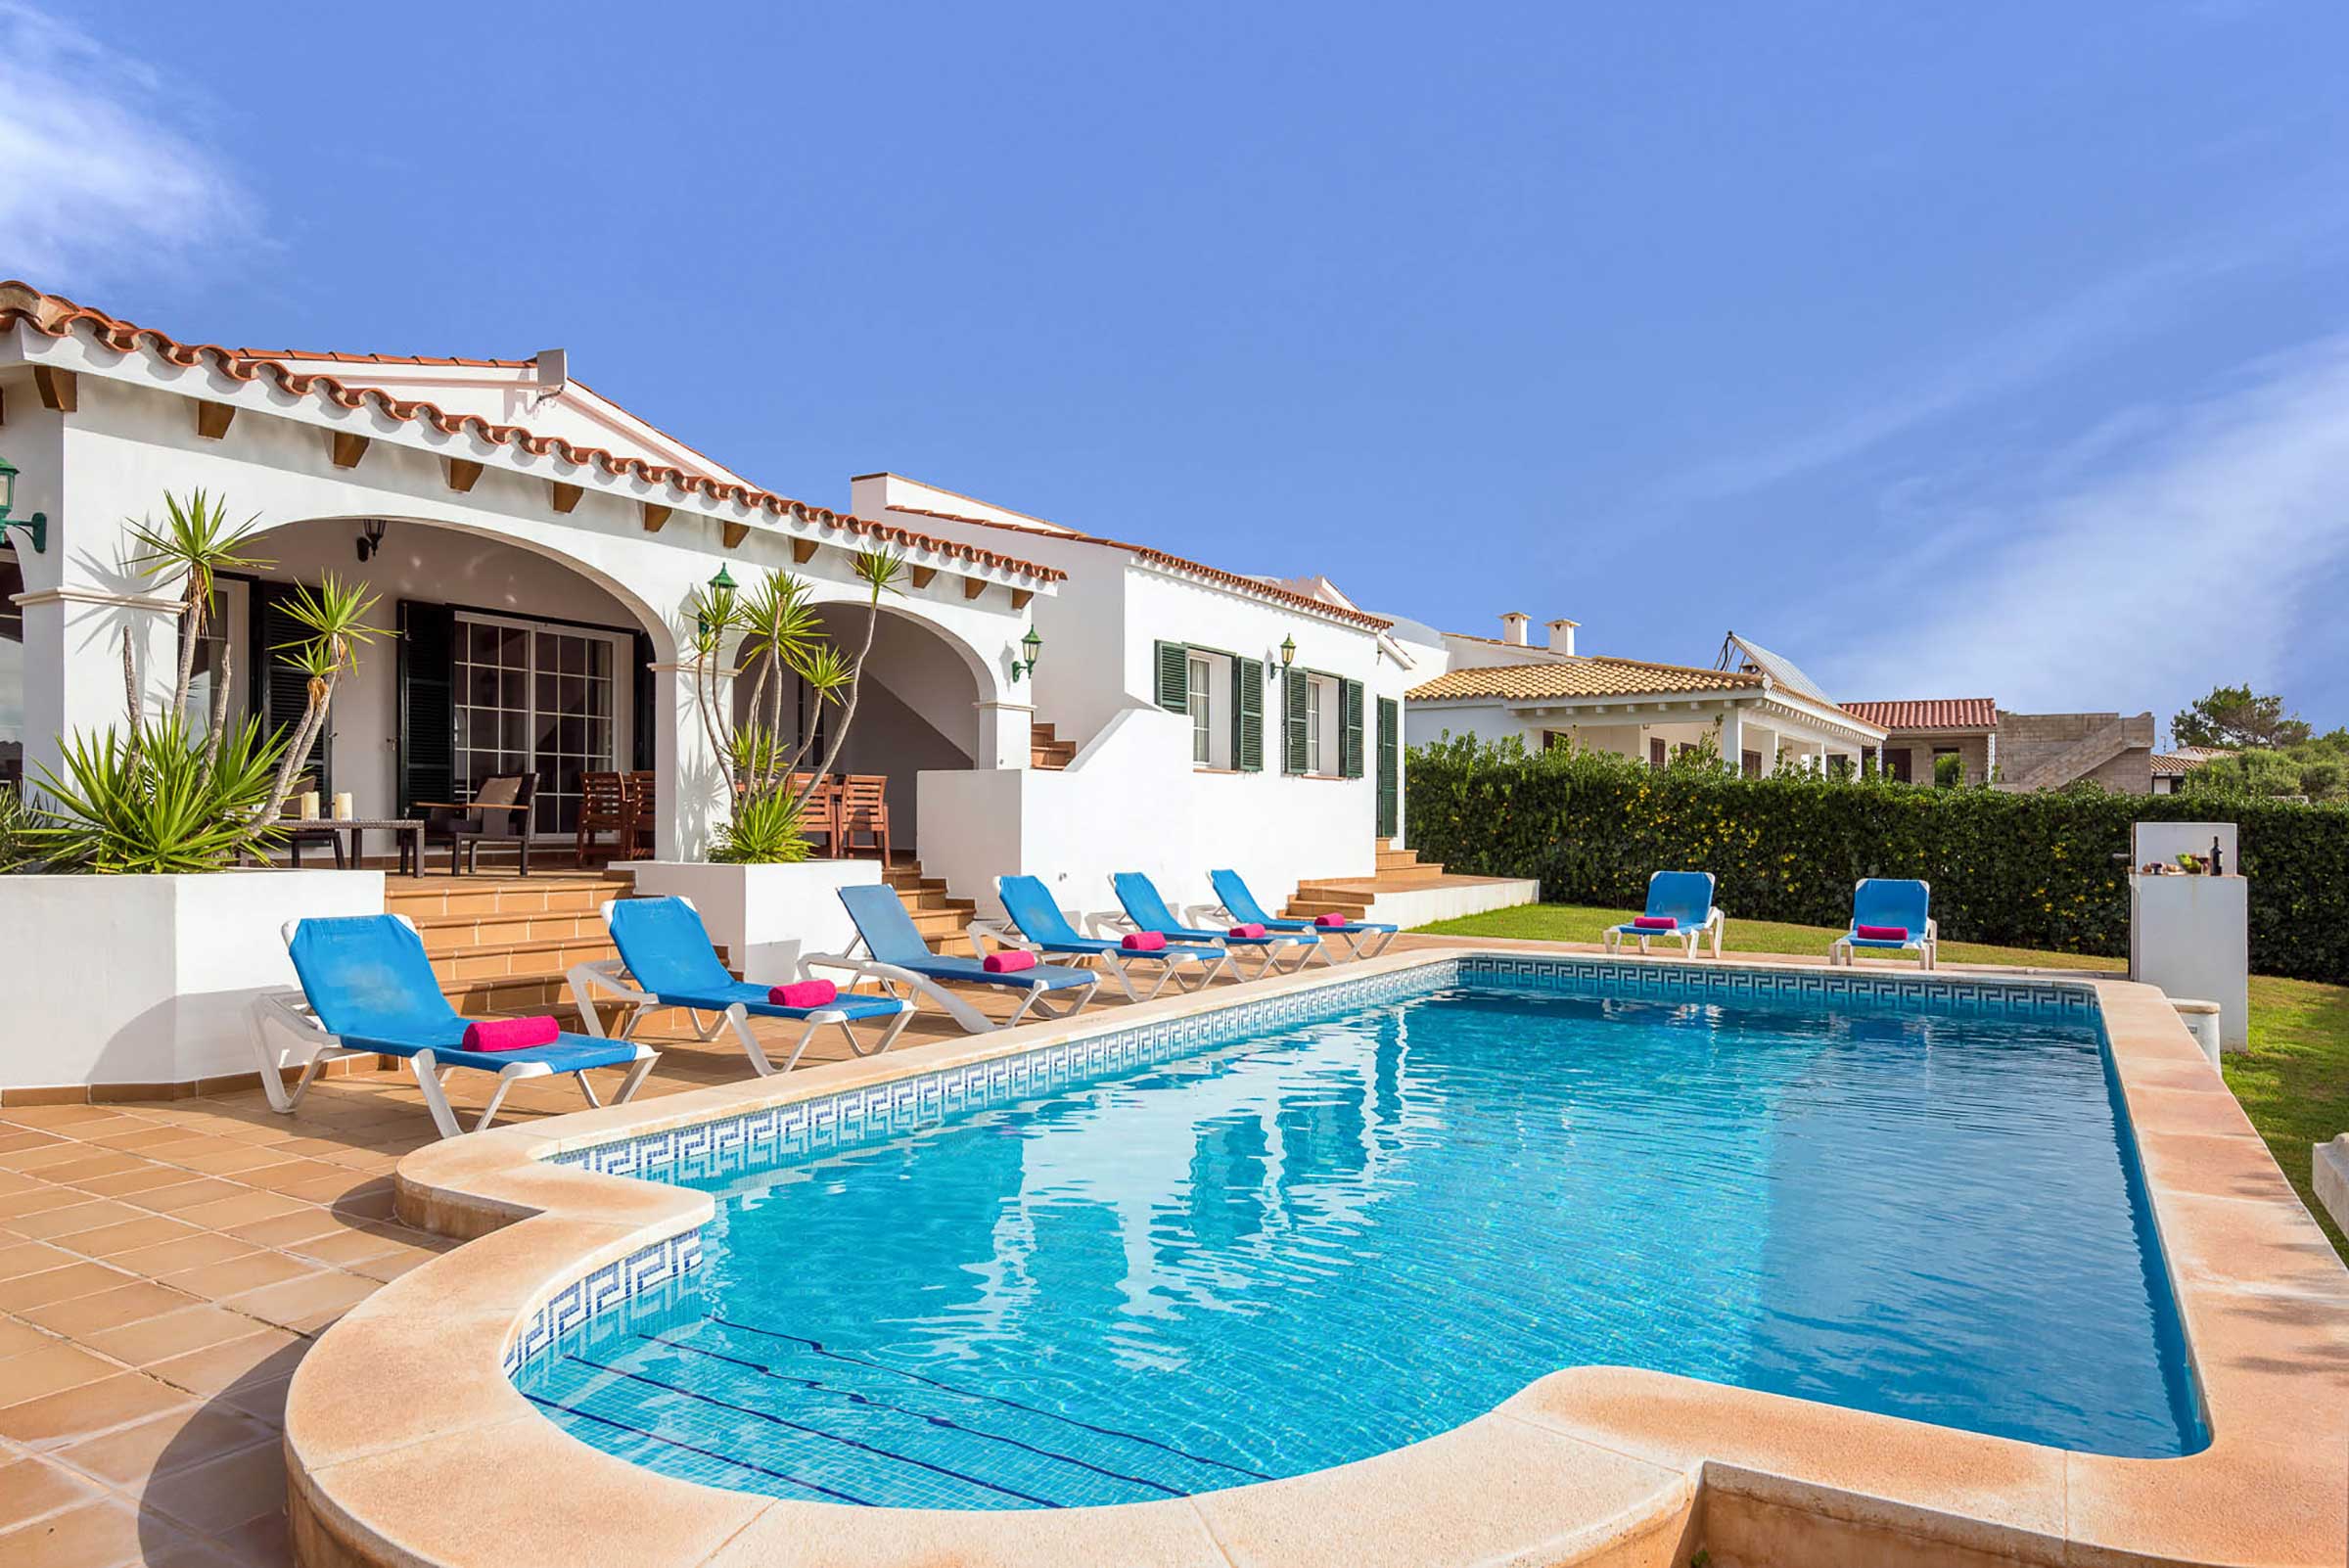 Property Image 1 - Classy Spanish Villa overlooking the Mediterranean Sea